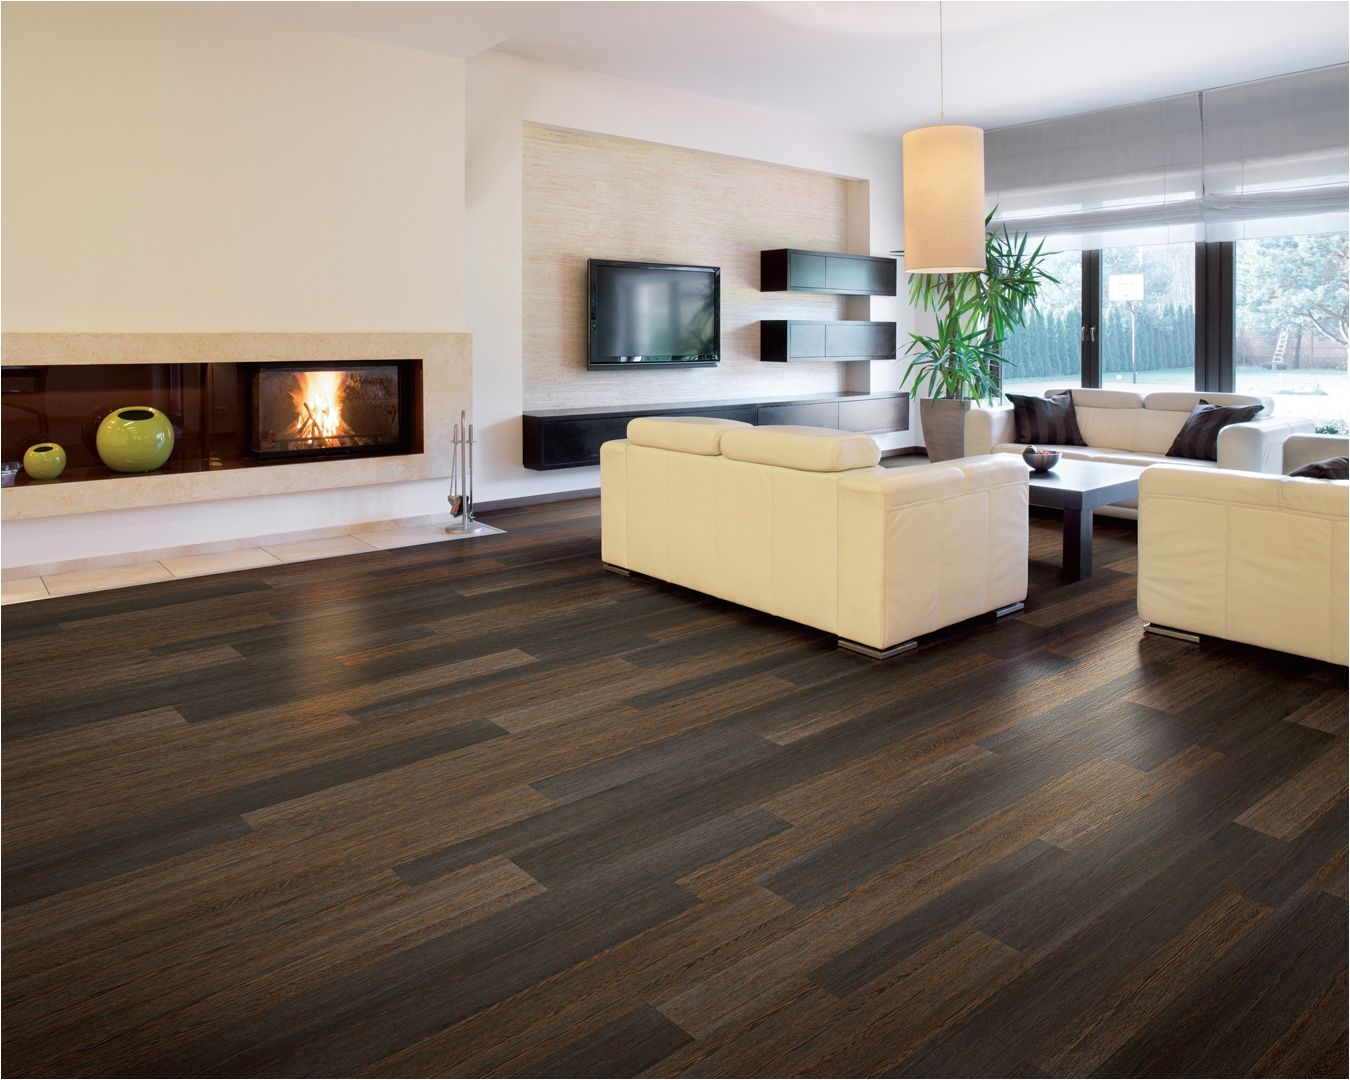 Coretec Plus Hd Flooring Vinyl Plank Flooring Coretec Plus Hd Xl Enhanced Design Floors